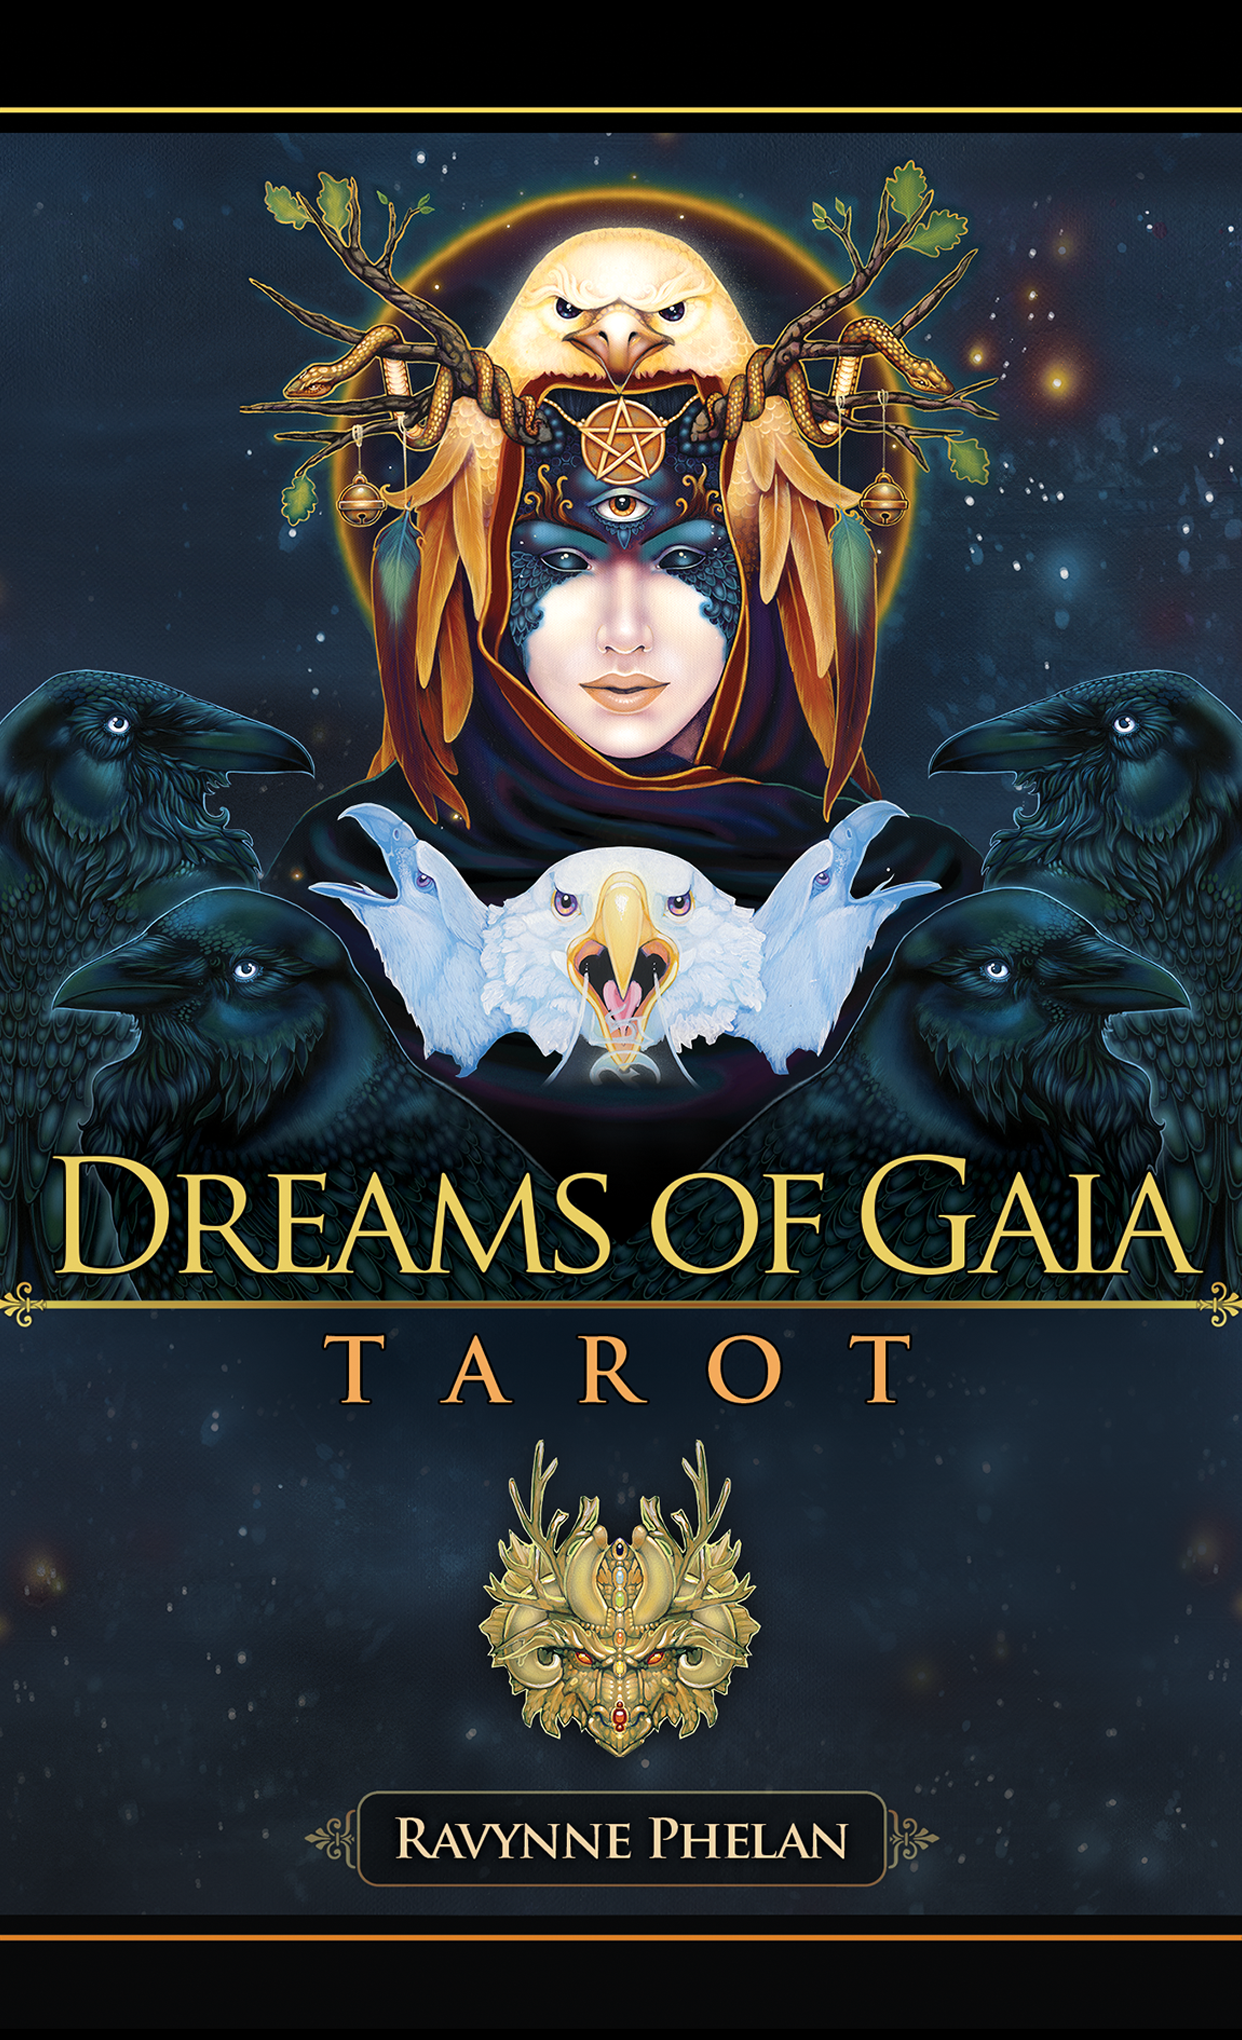 Dreams of Gaia Tarot by Ravynne Phelan